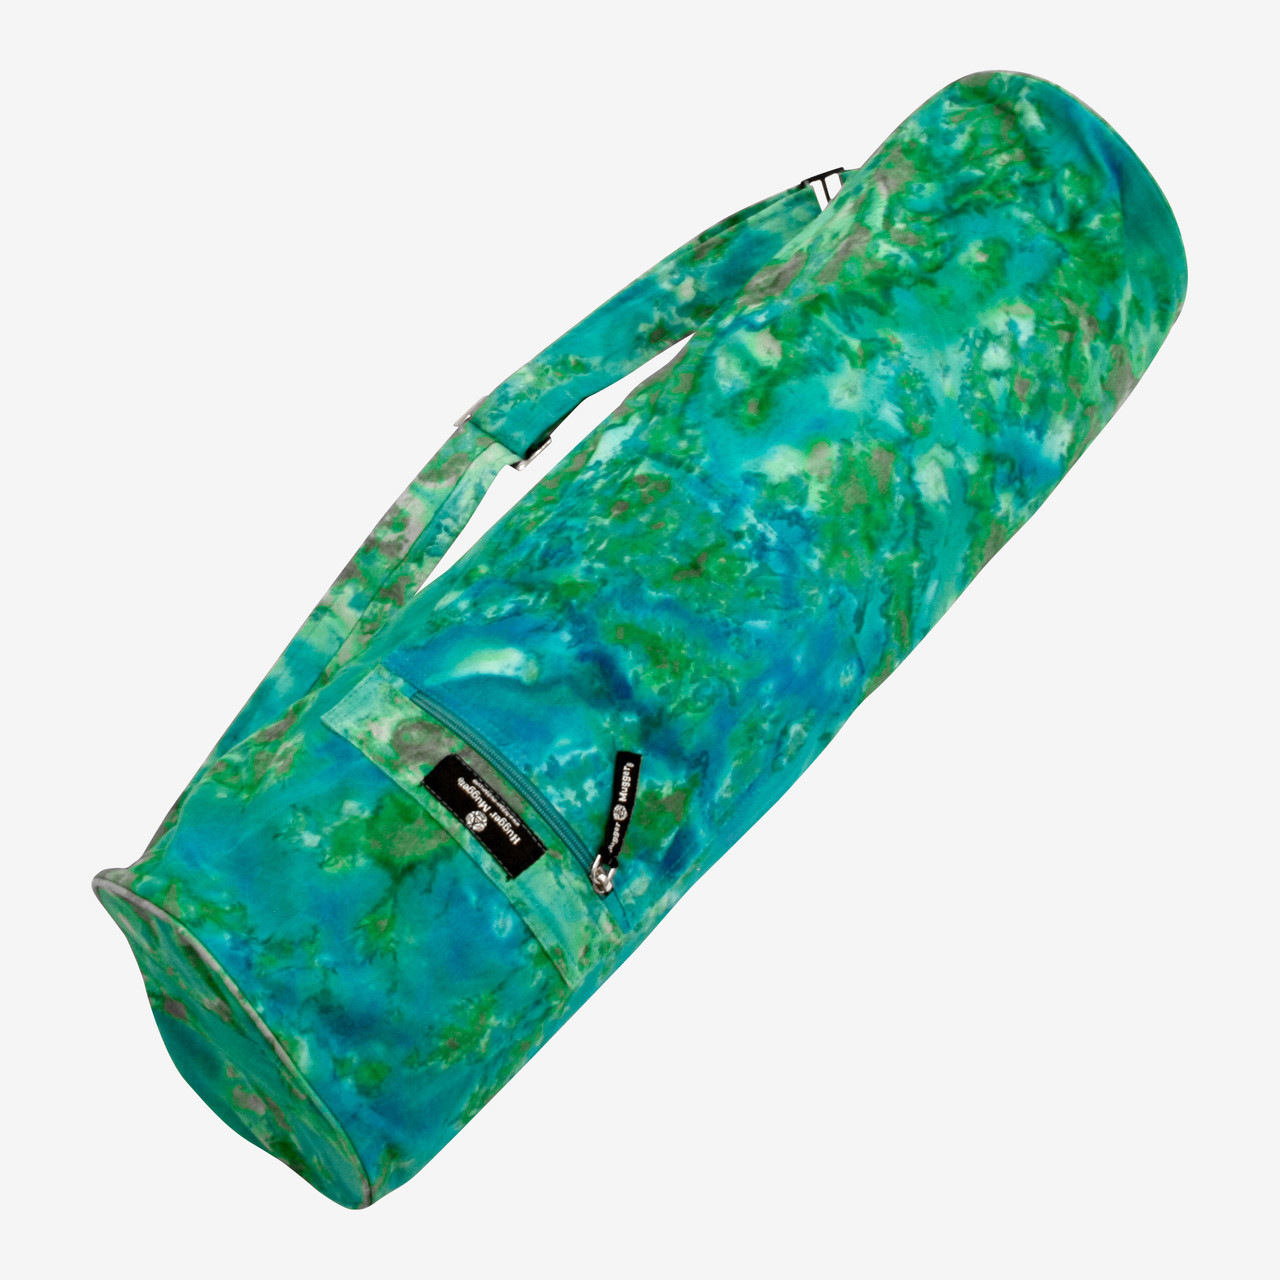 HAGUSU Yoga Mat Bag, Waterproof Bags and Carriers One Size, Blue Leaf